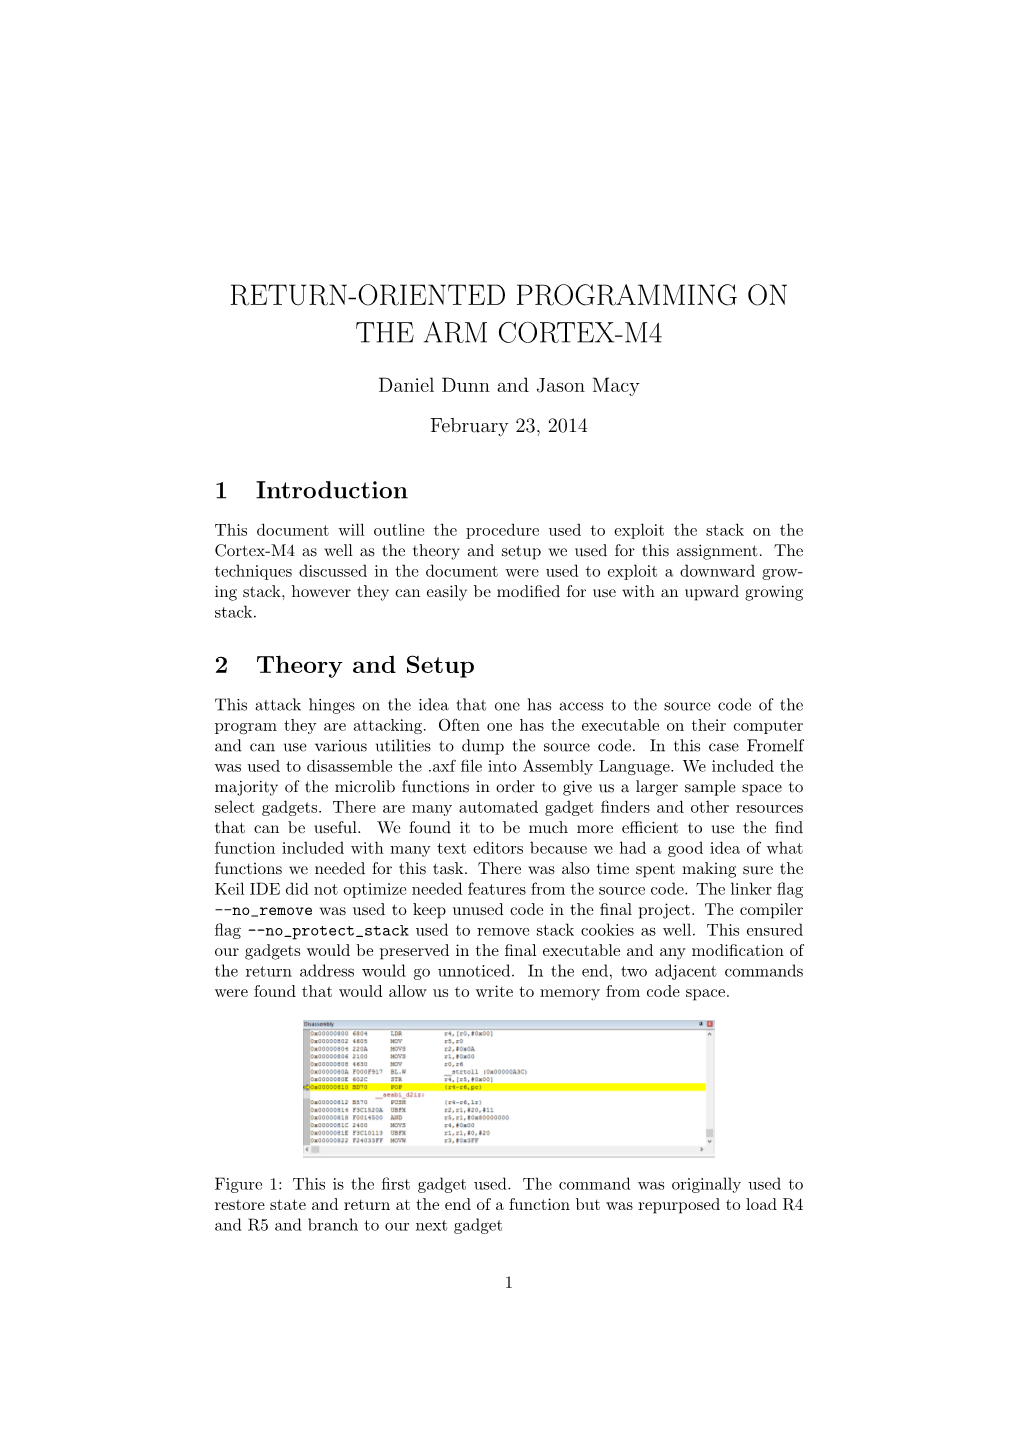 Return-Oriented Programming on the Arm Cortex-M4